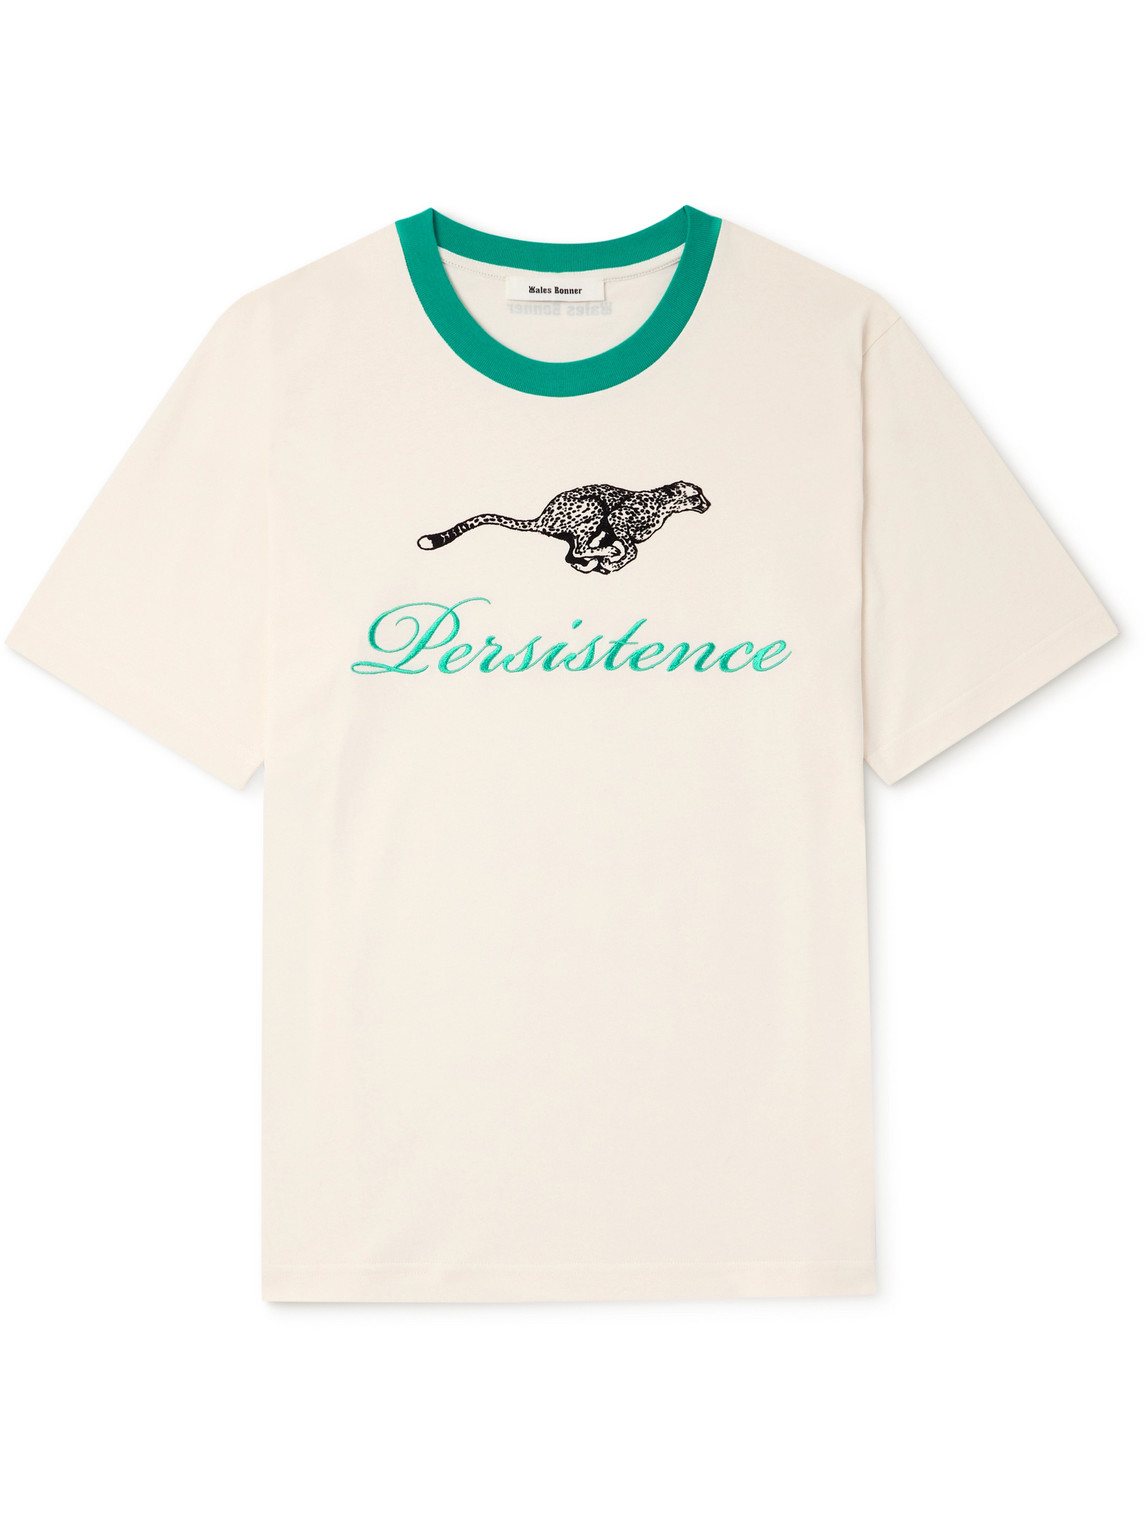 Wales Bonner - Resilience Embroidered Flocked Organic Cotton-Jersey T-Shirt - Men - Neutrals - S von Wales Bonner